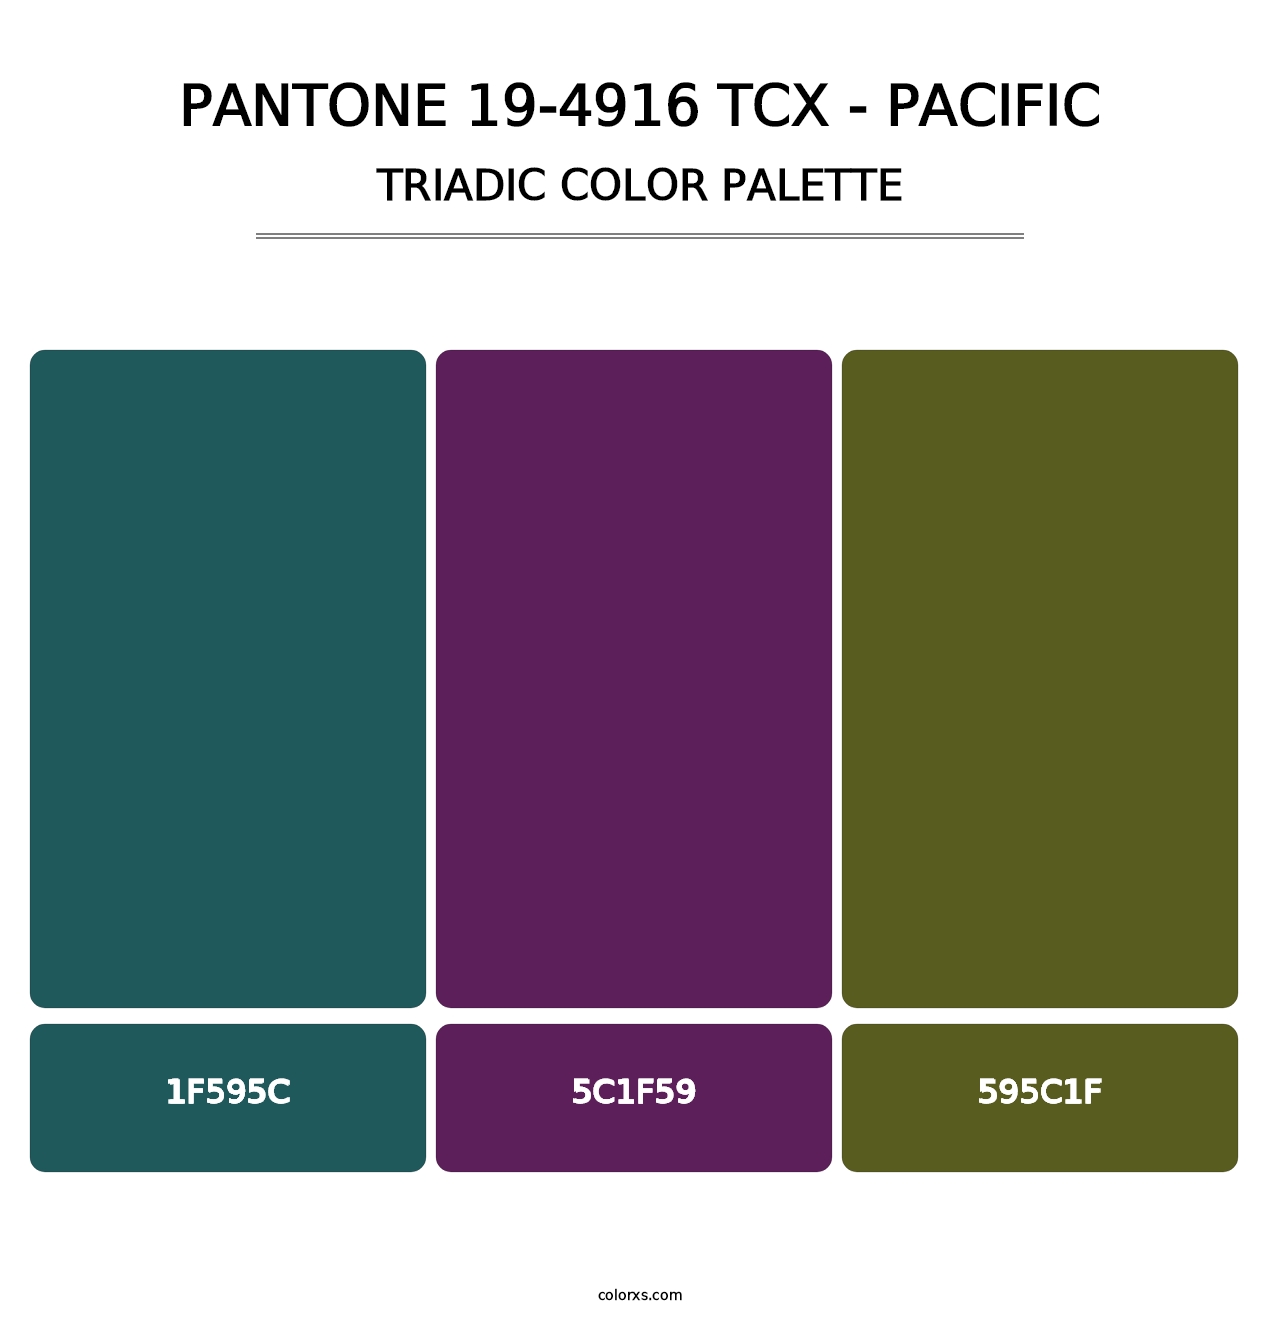 PANTONE 19-4916 TCX - Pacific - Triadic Color Palette